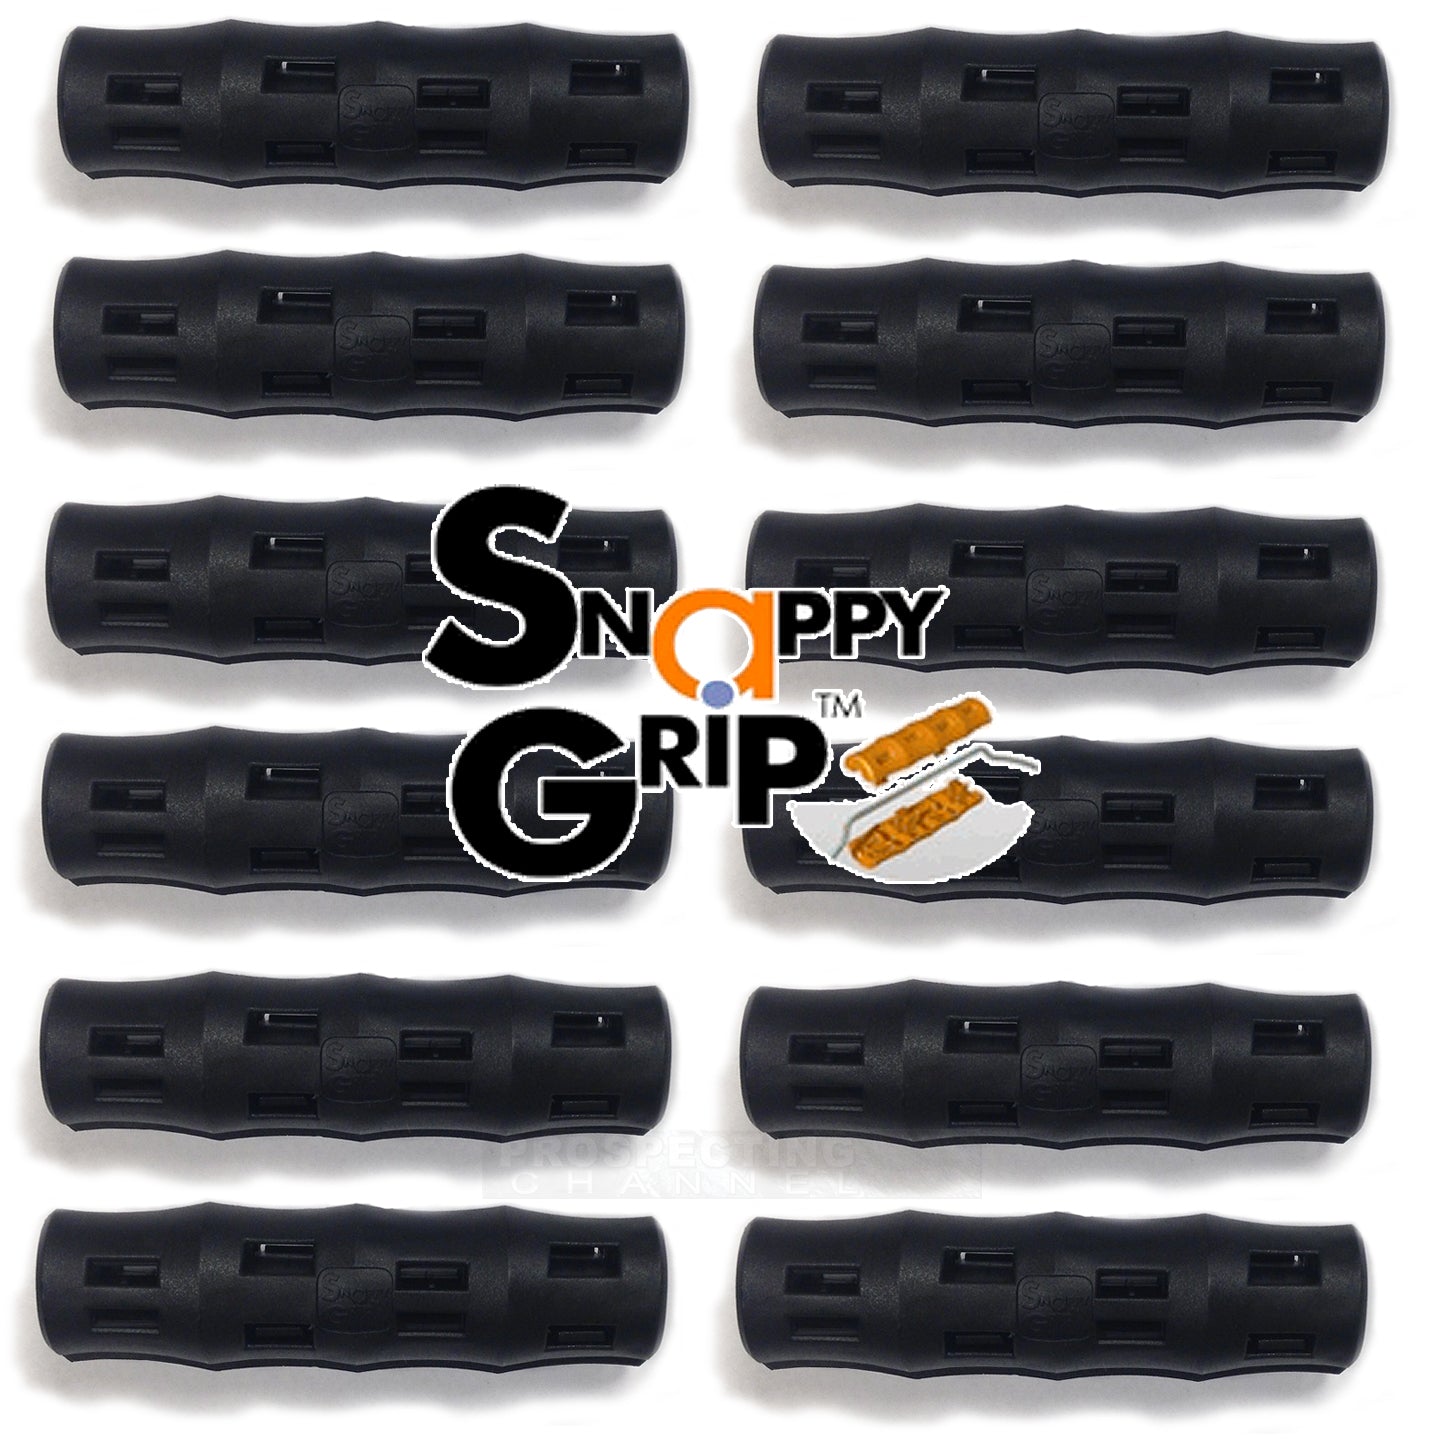 12 asas ergonómicas para cubos Snappy Grip en color negro